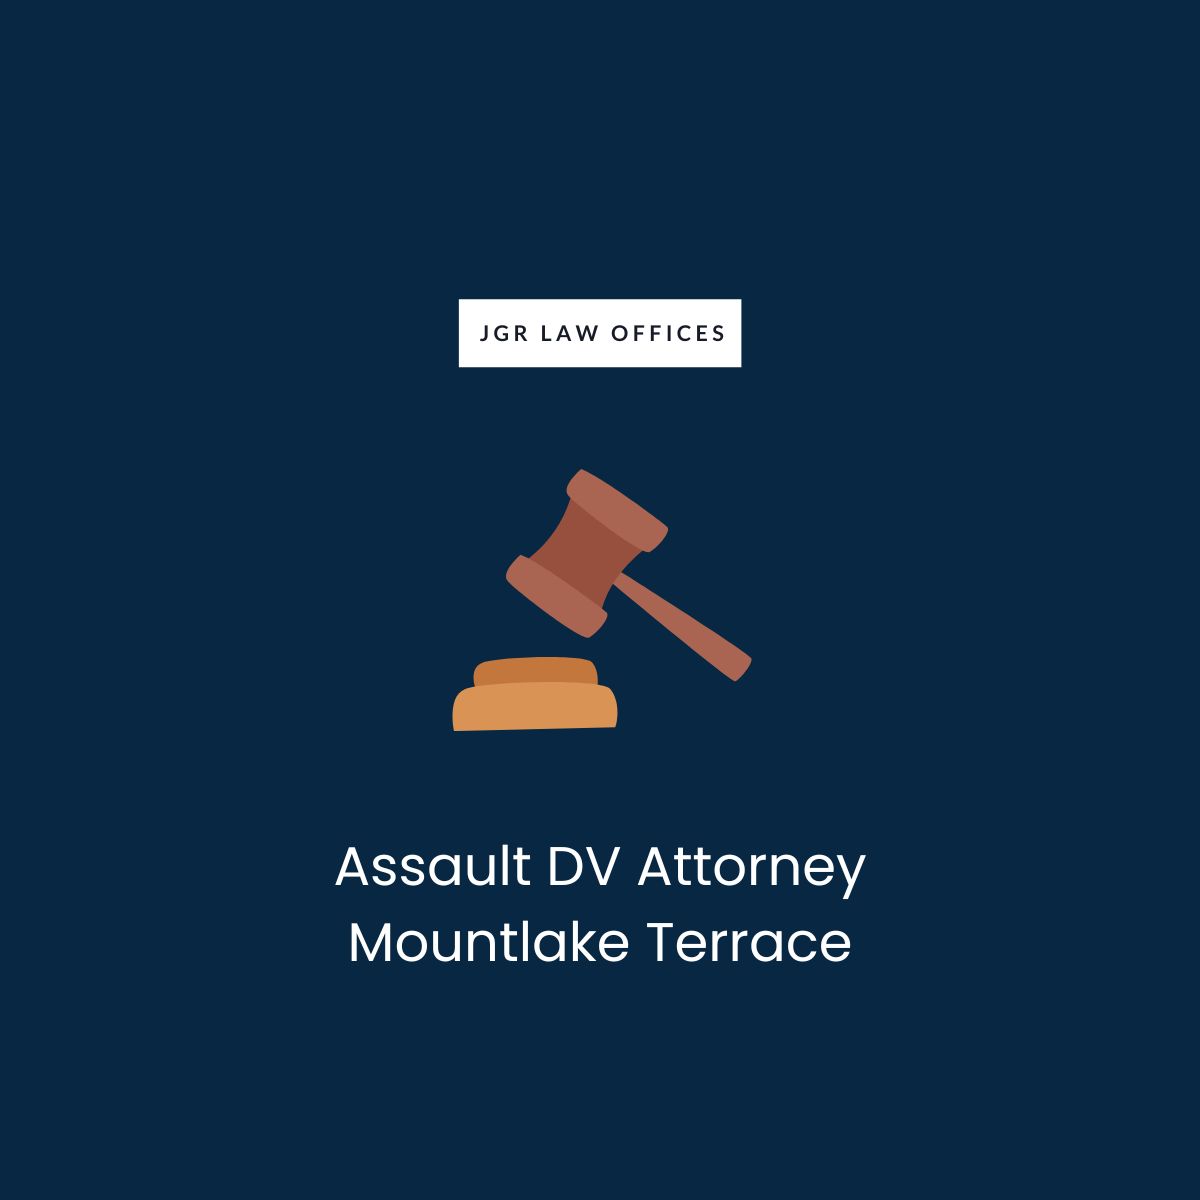 Assault DV Attorney Mountlake Terrace